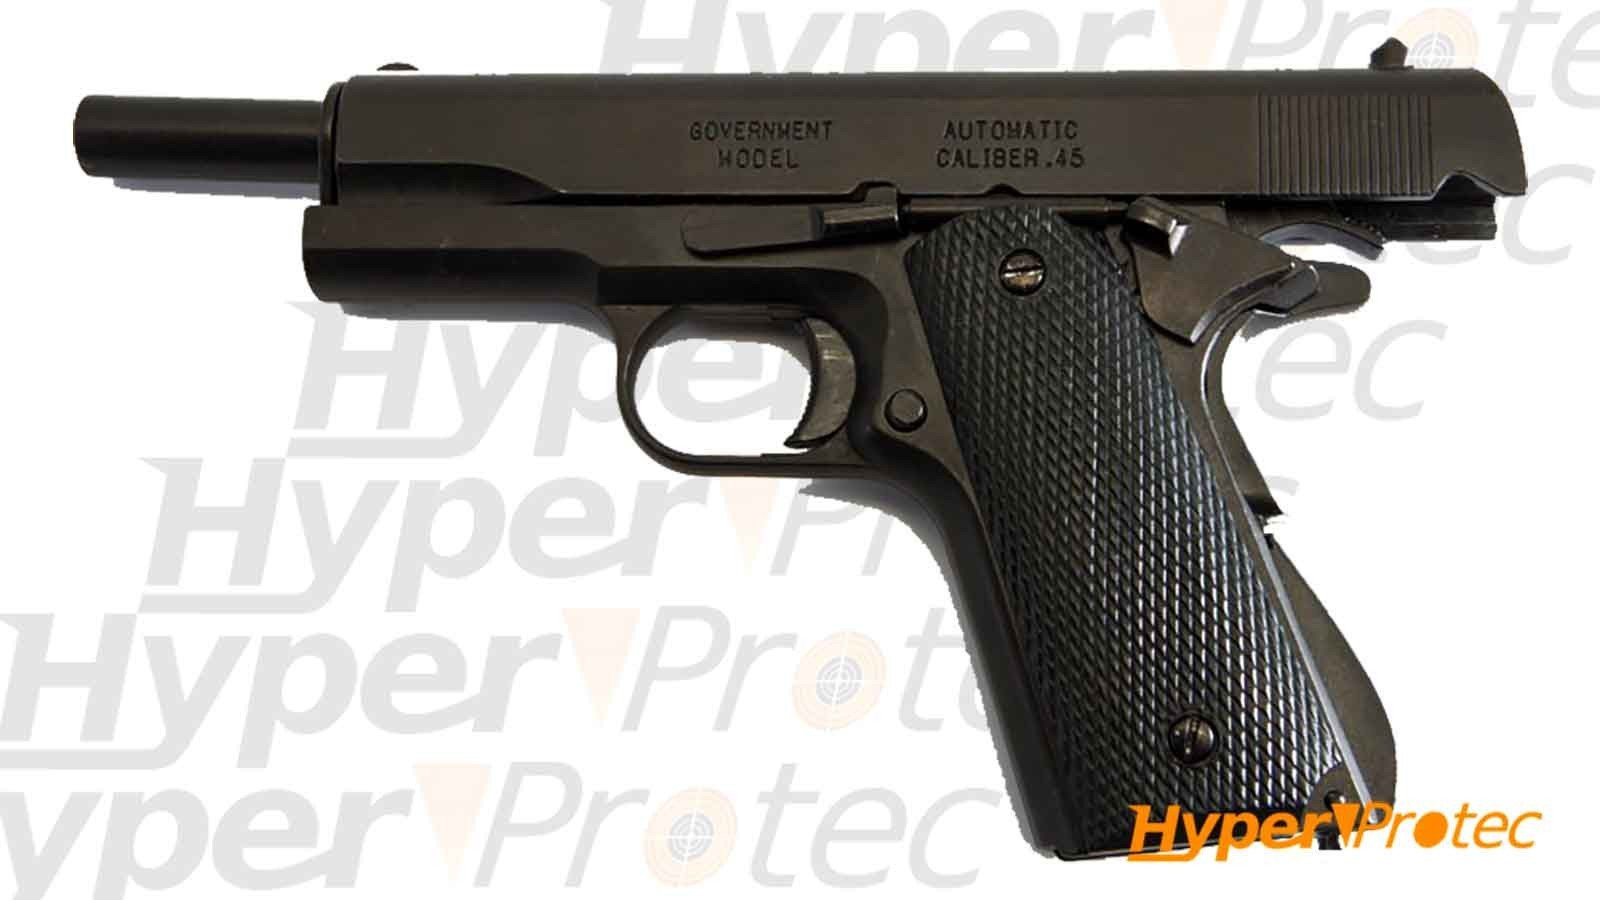 Arme Factice - Hyperprotec